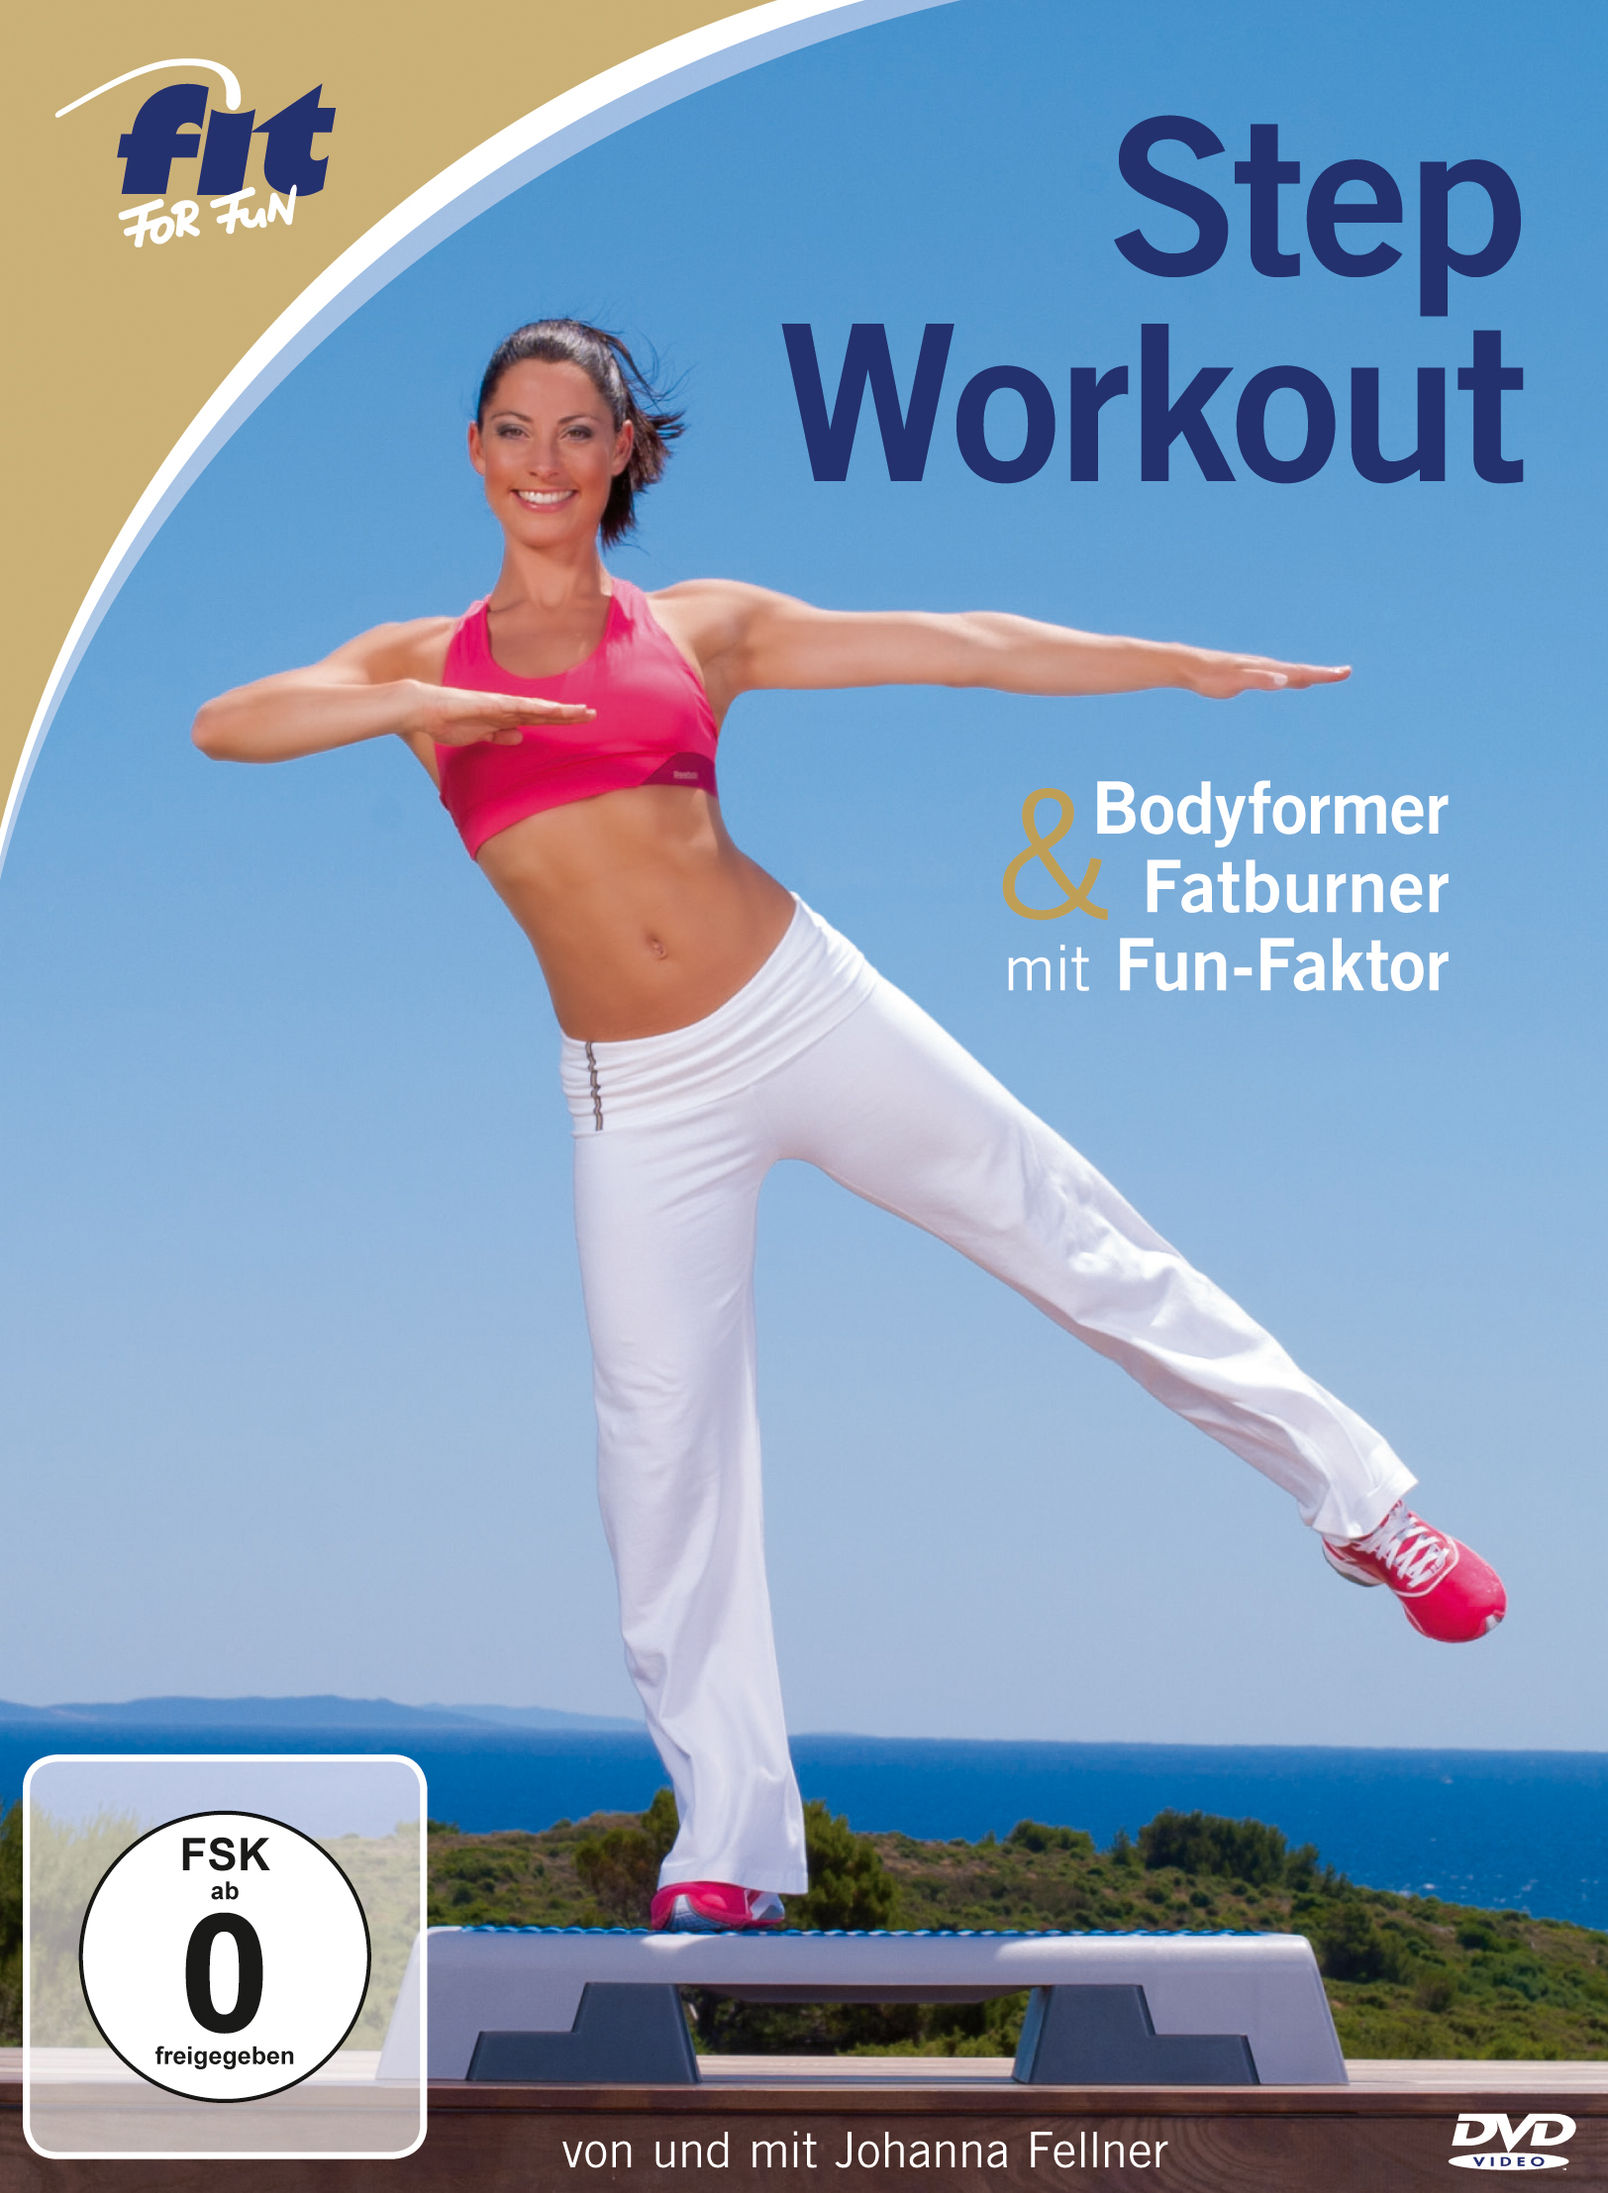 Fit For Fun: Step Workout - Bodyformer & Fatburner mit Fun-Faktor Film |  Weltbild.de